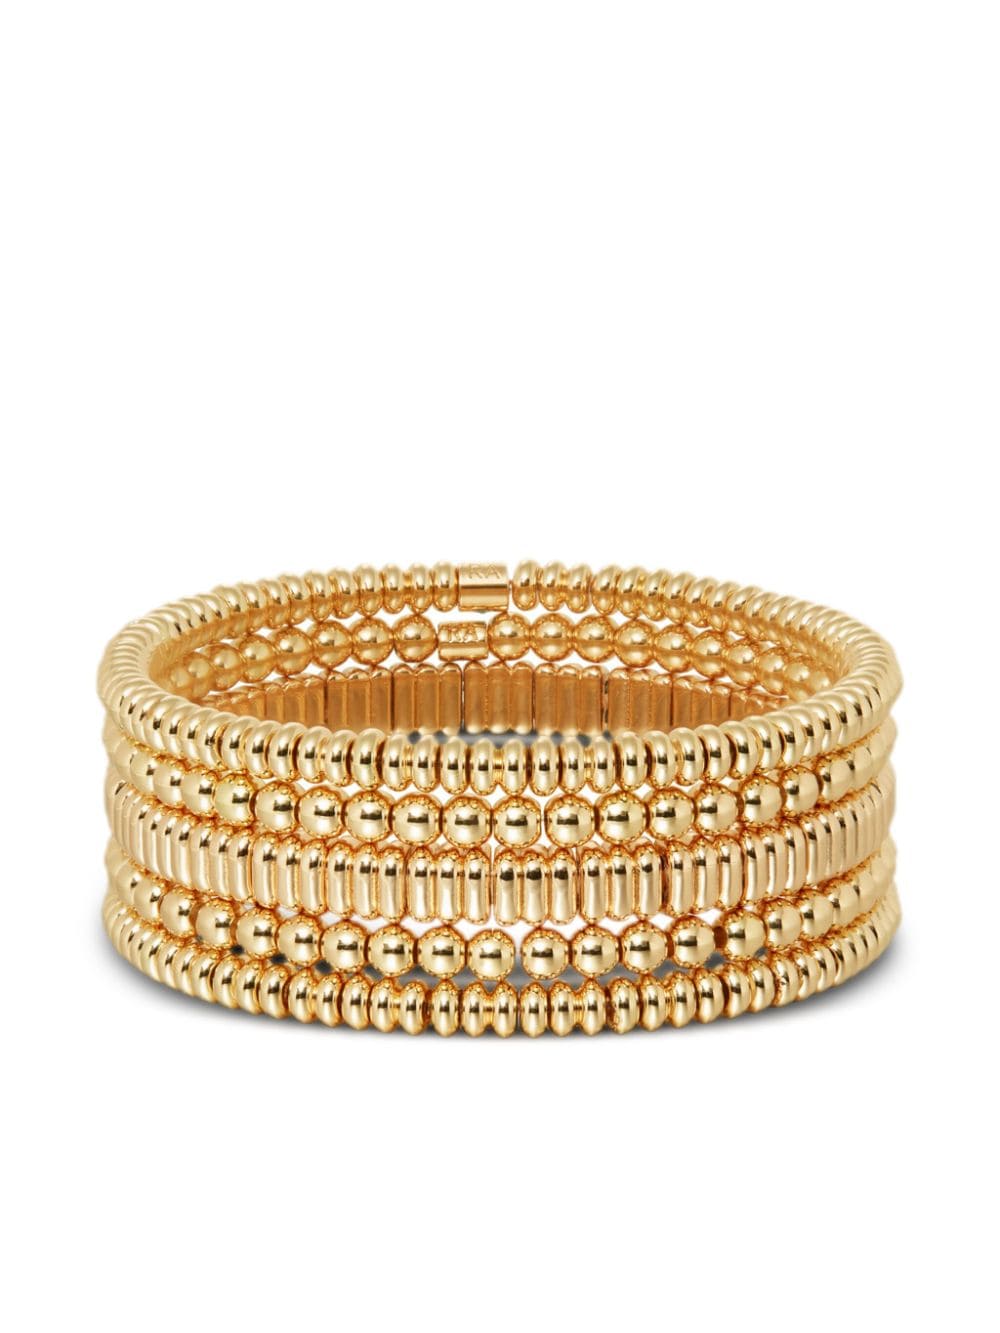 Roxanne Assoulin Vijf The Luxe kralenarmbanden - Goud